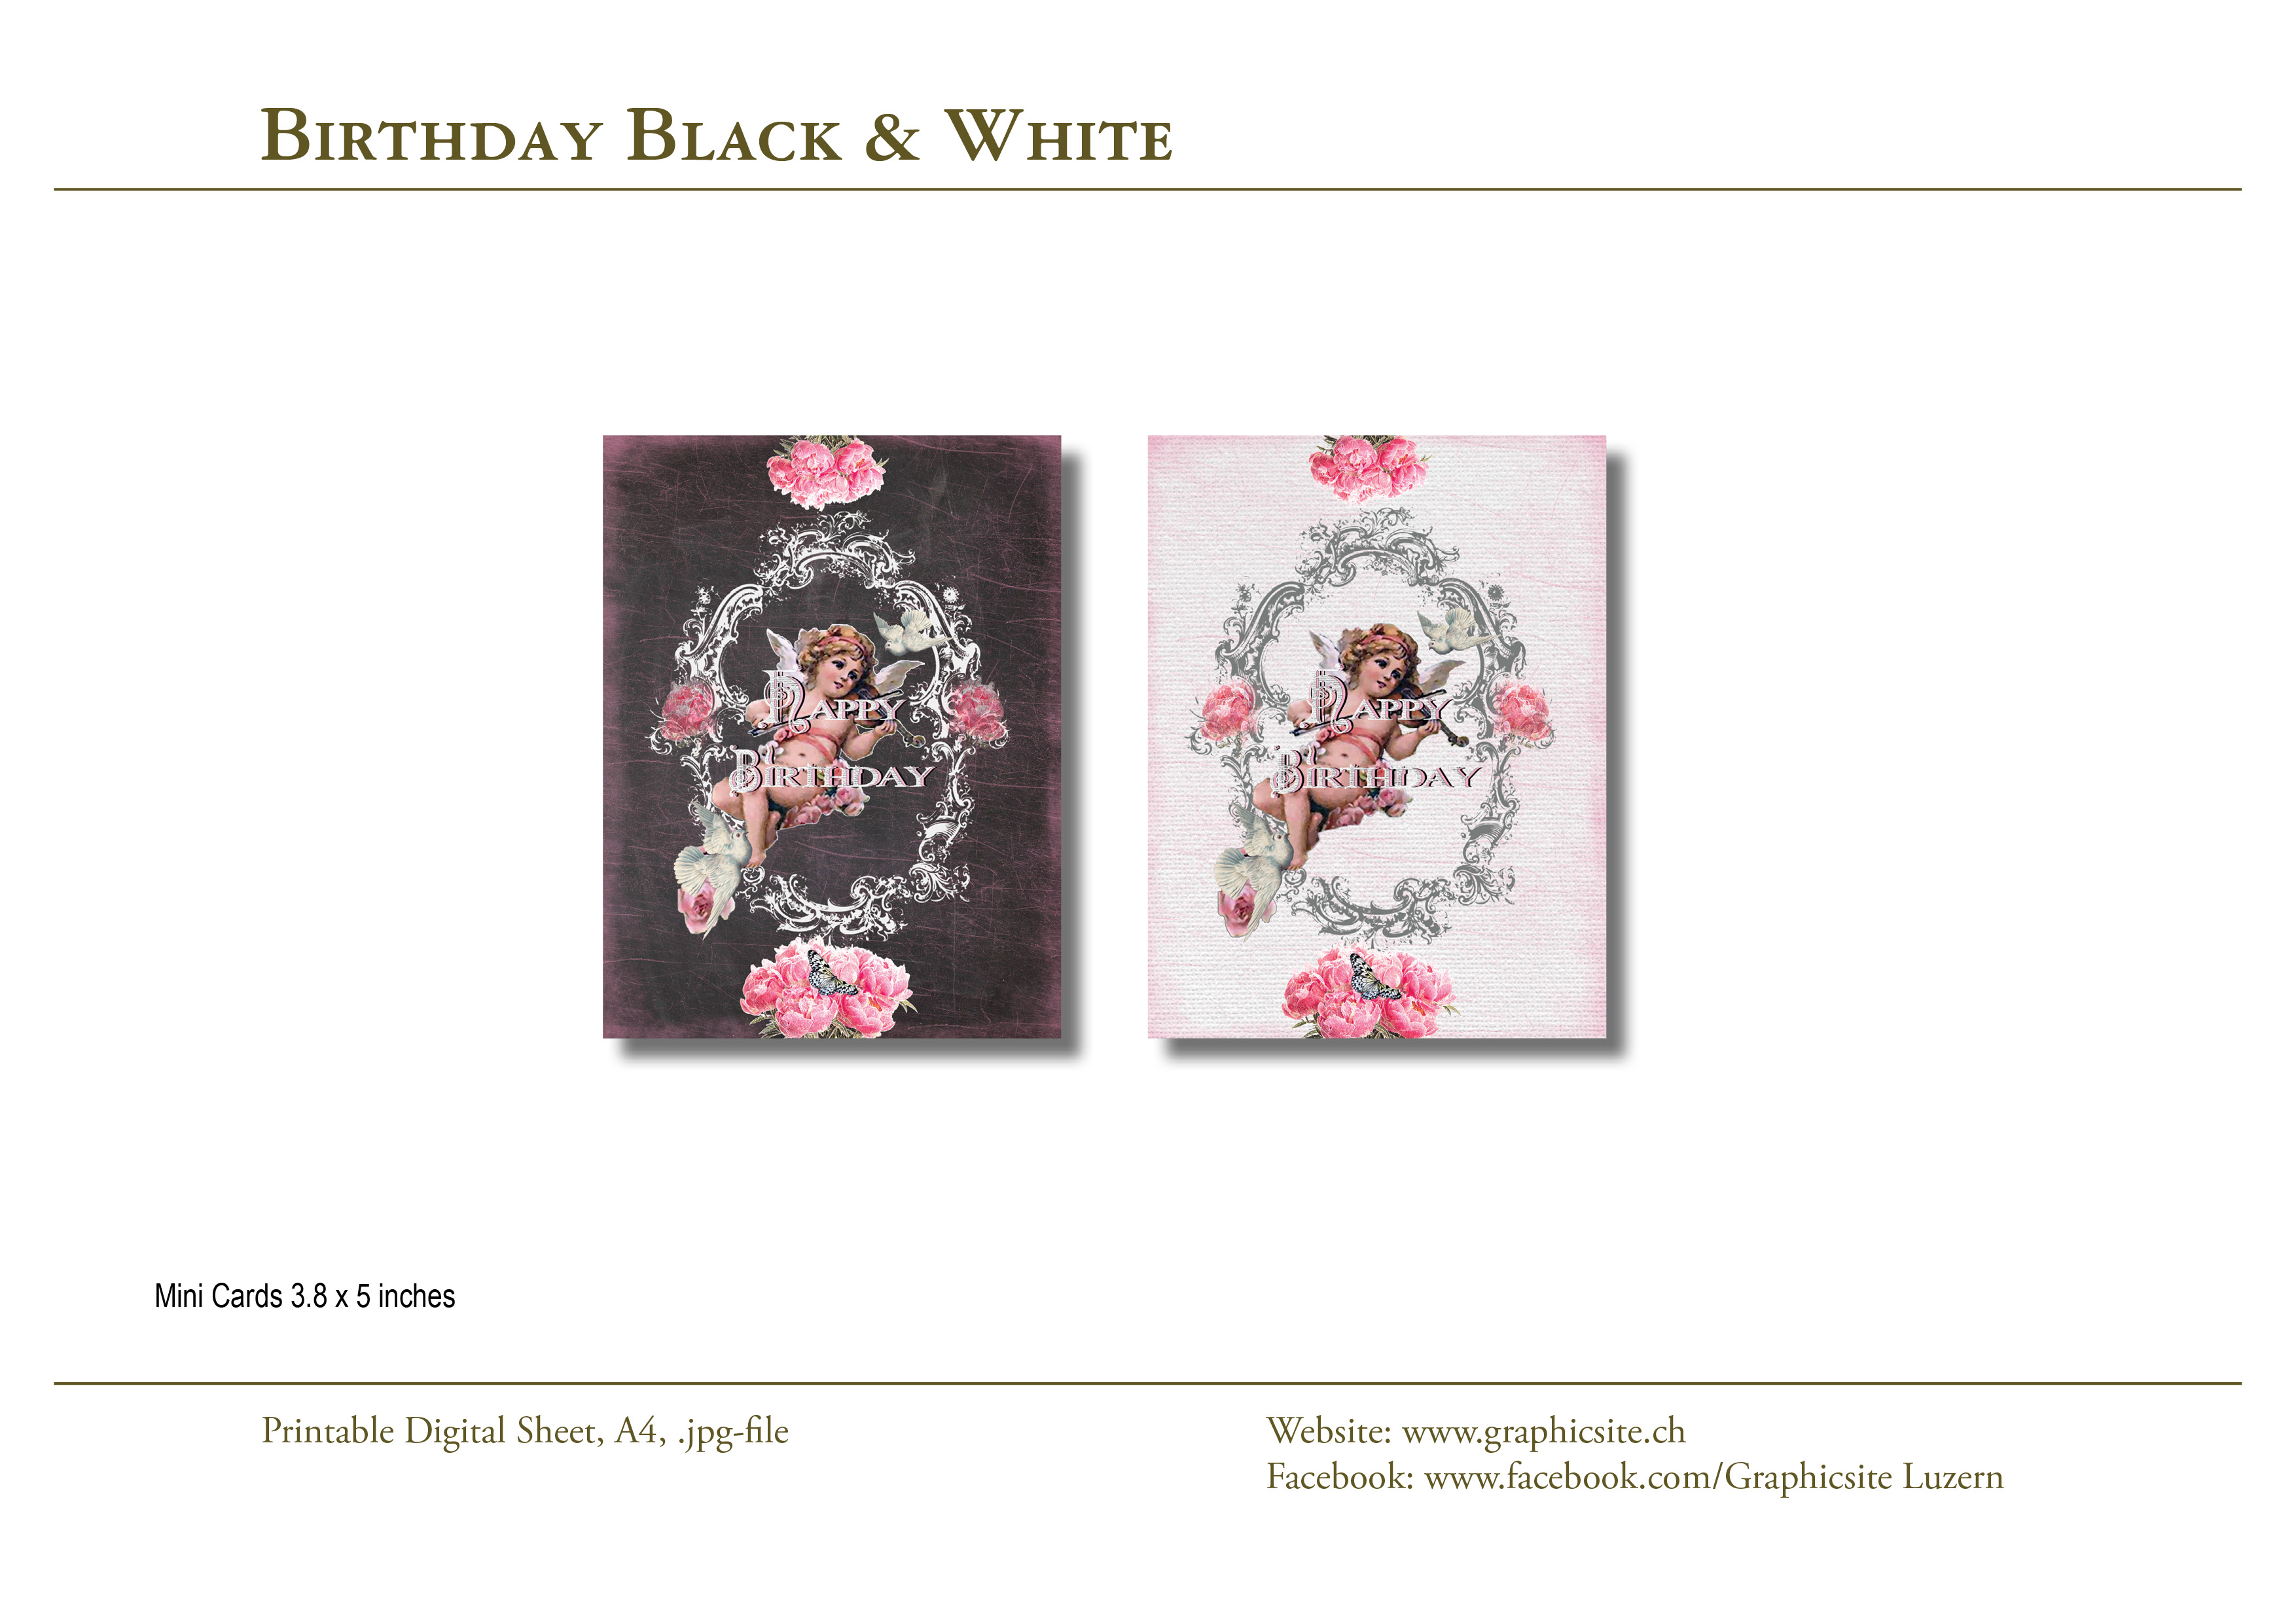 Printable Sheets - 3.8 Mini Cards - Birthday - BlackWhite, Angel, Roses